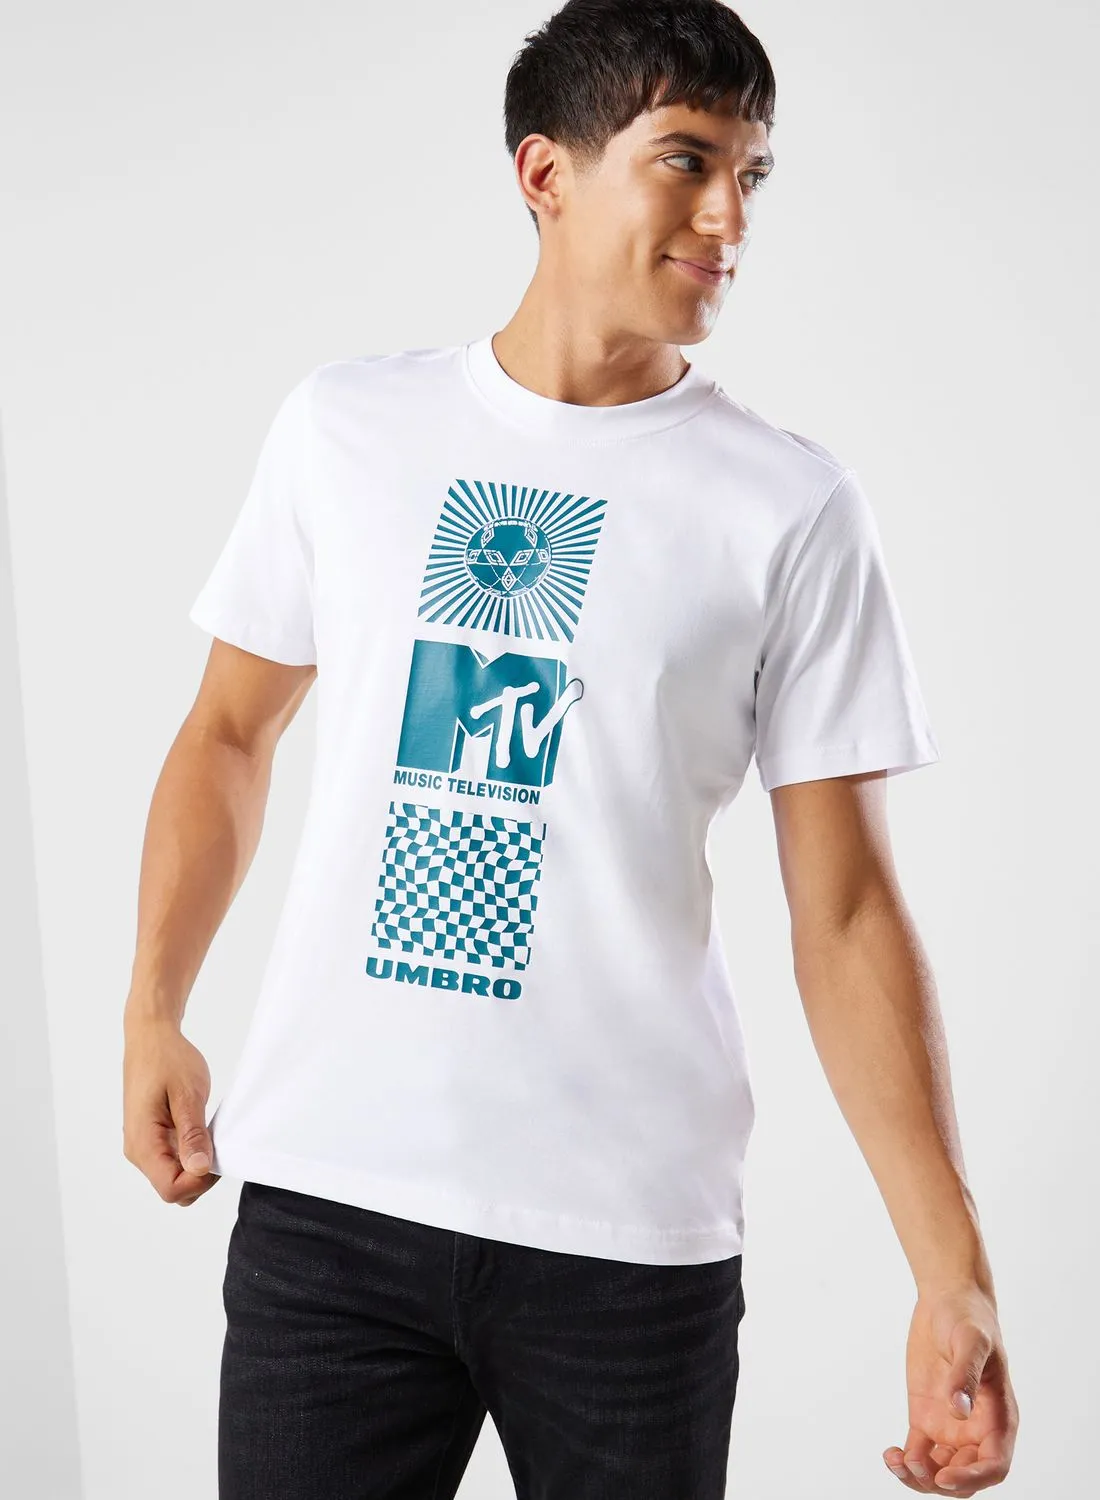 umbro Mtv Graphic T-Shirt